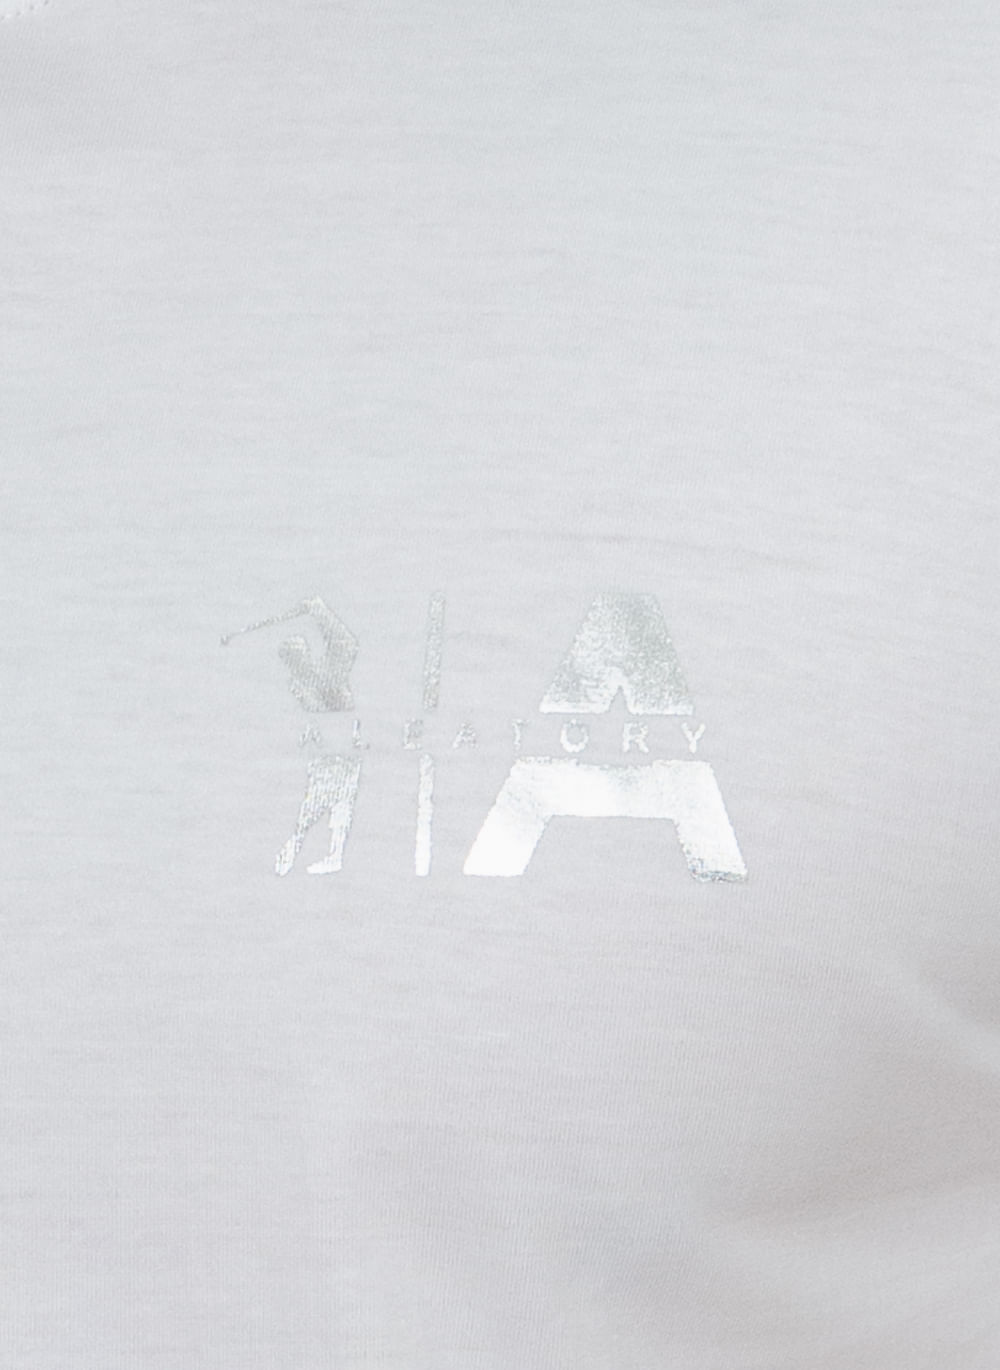 Camiseta-Aleatory-Estampada-Silver-One-Branca-Branco-P